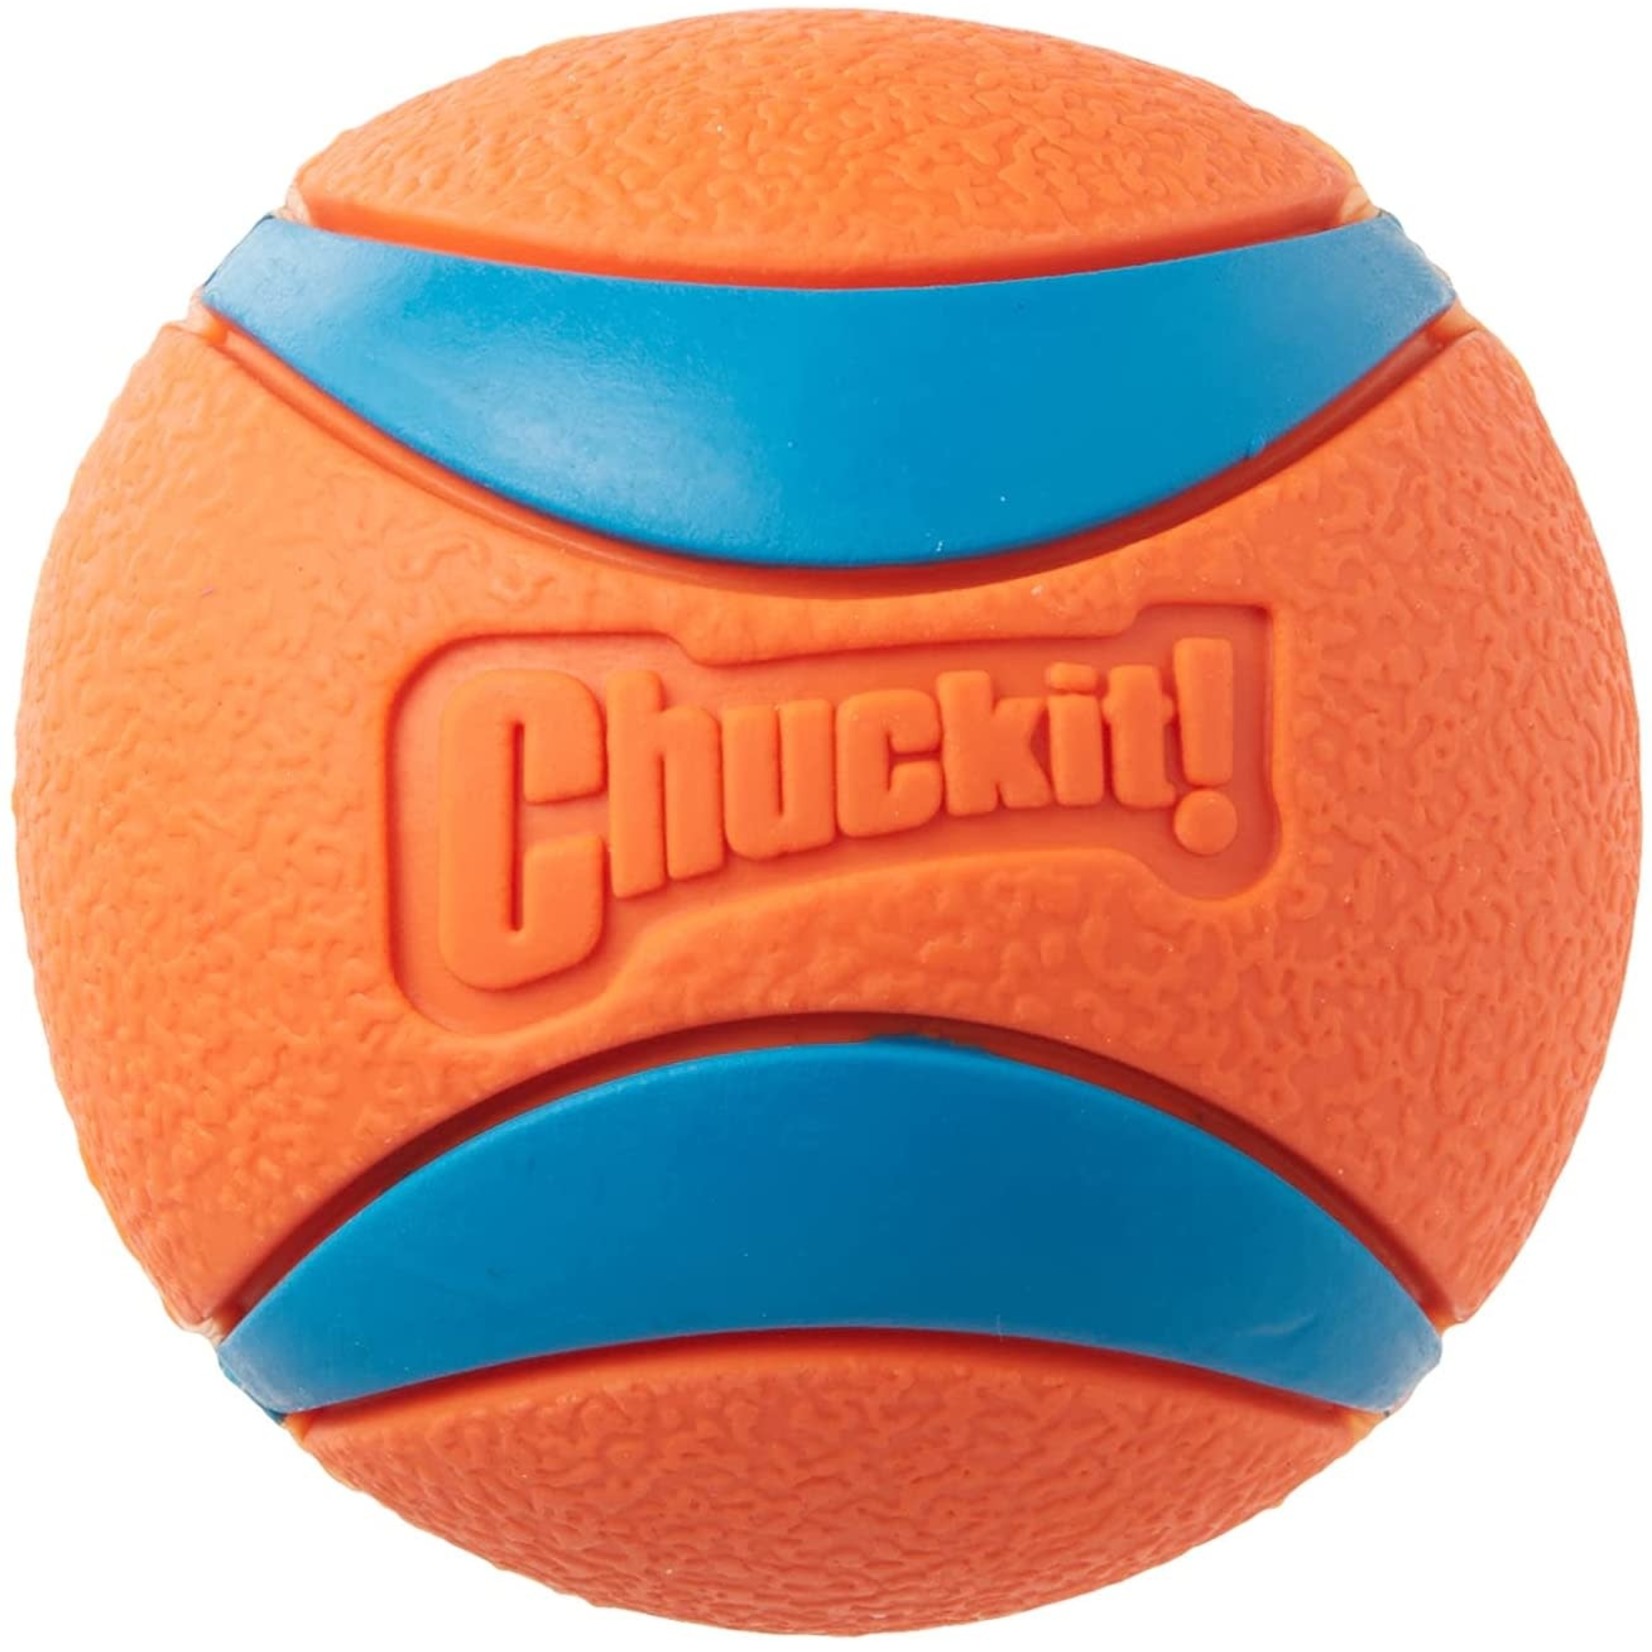 Chuckit ! Ultra Ball Float